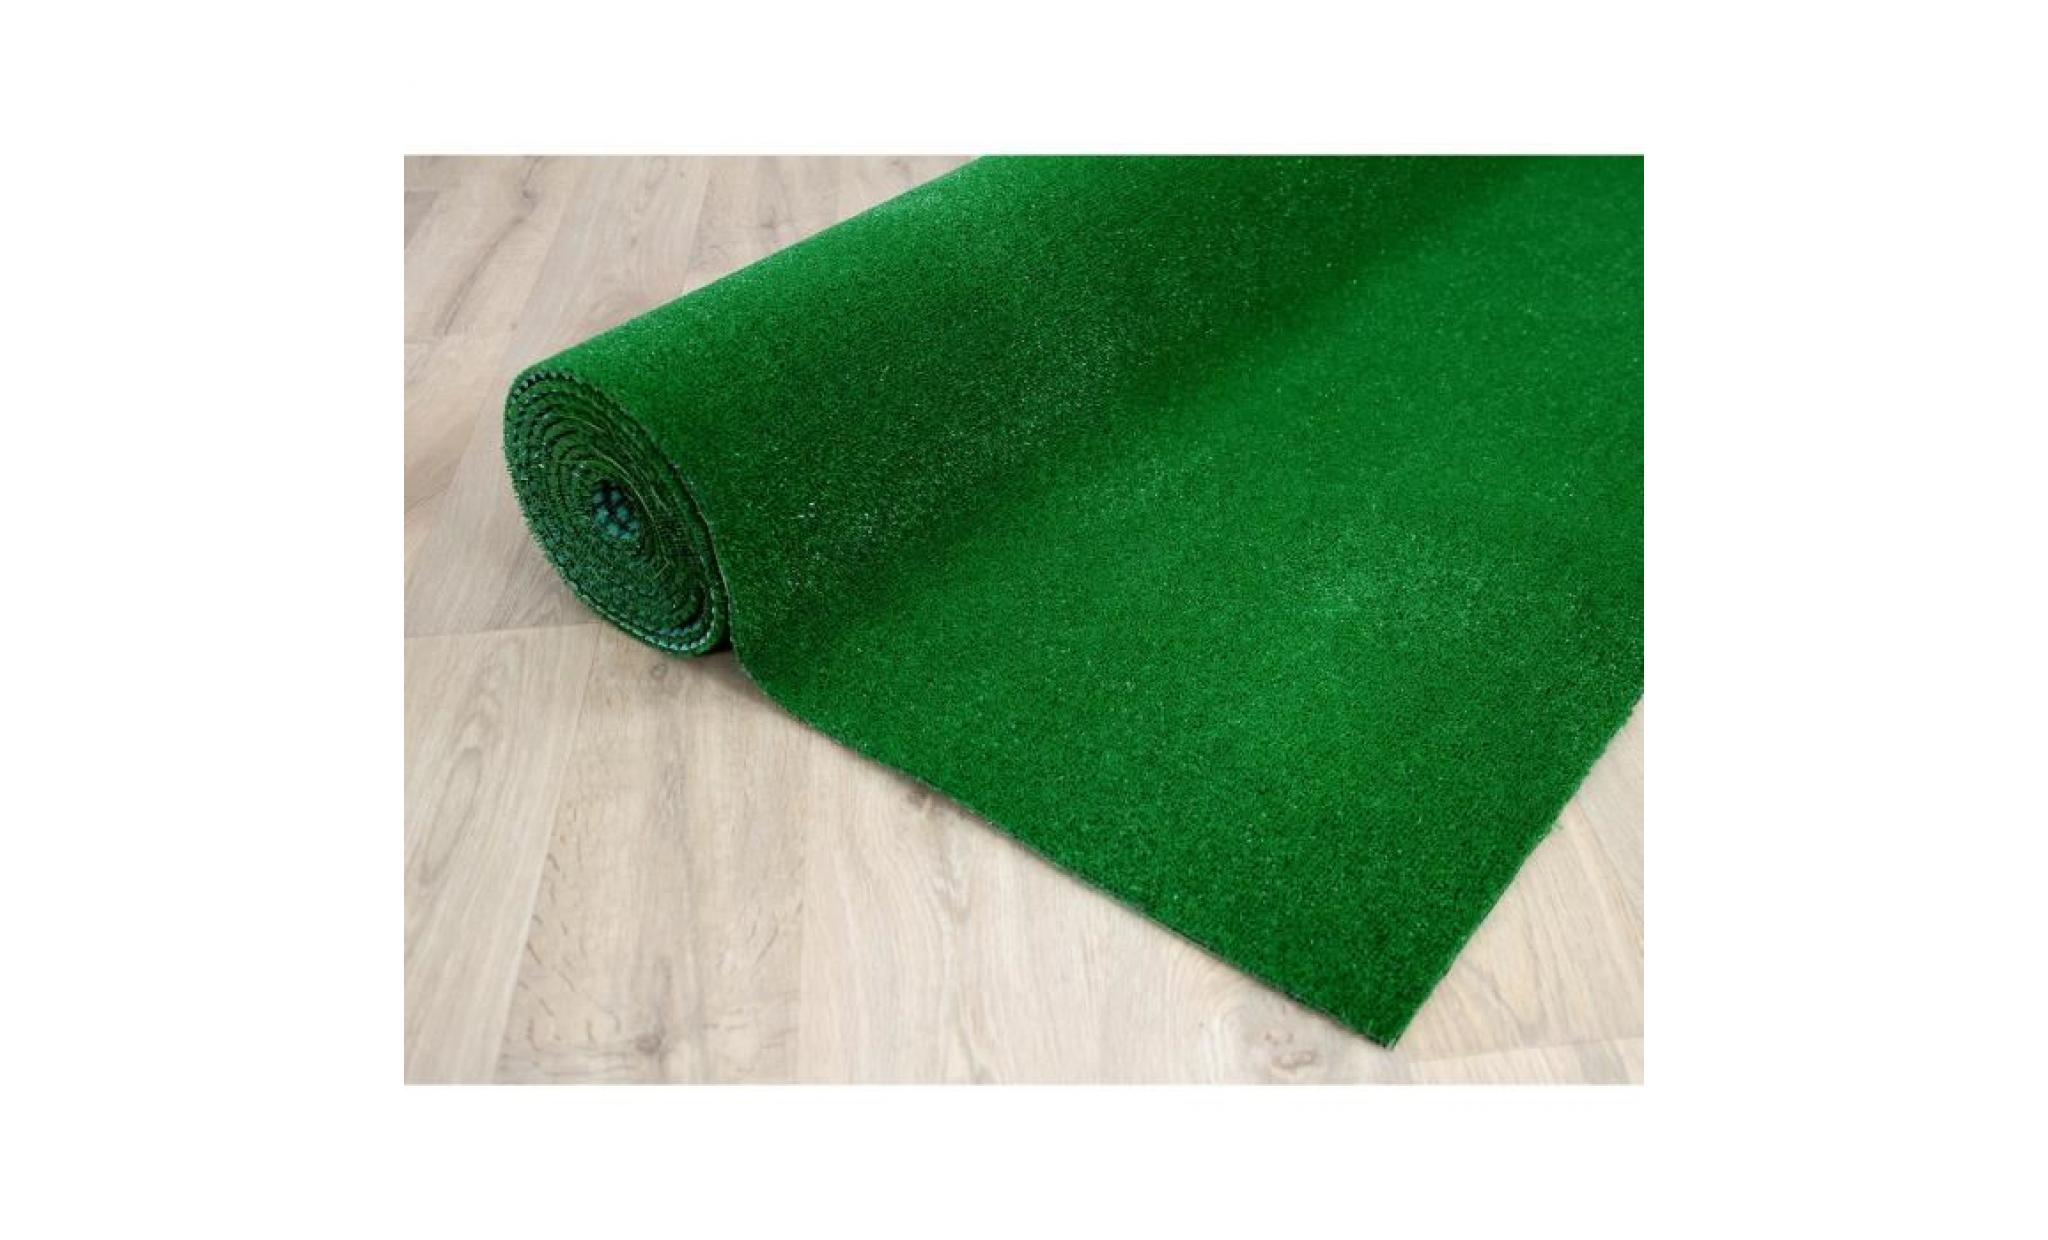 york   tapis type gazon artificiel avec nubs – pour jardin, terrasse, balcon   vert   [200x450 cm]